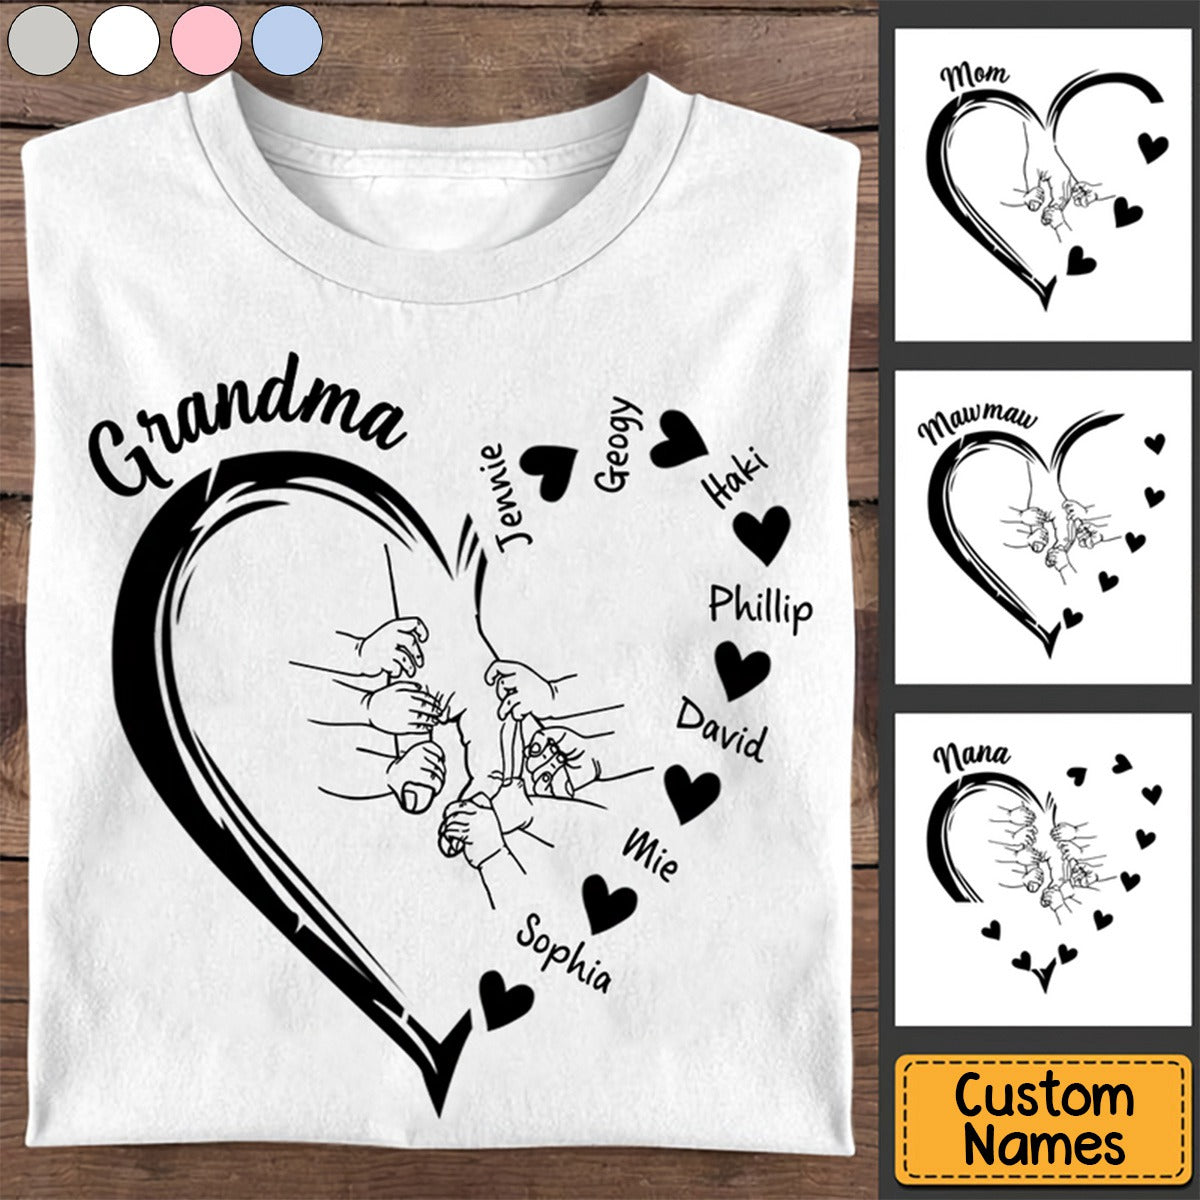 Personalized Grandma Mama And Kid Hands Heart Shirt